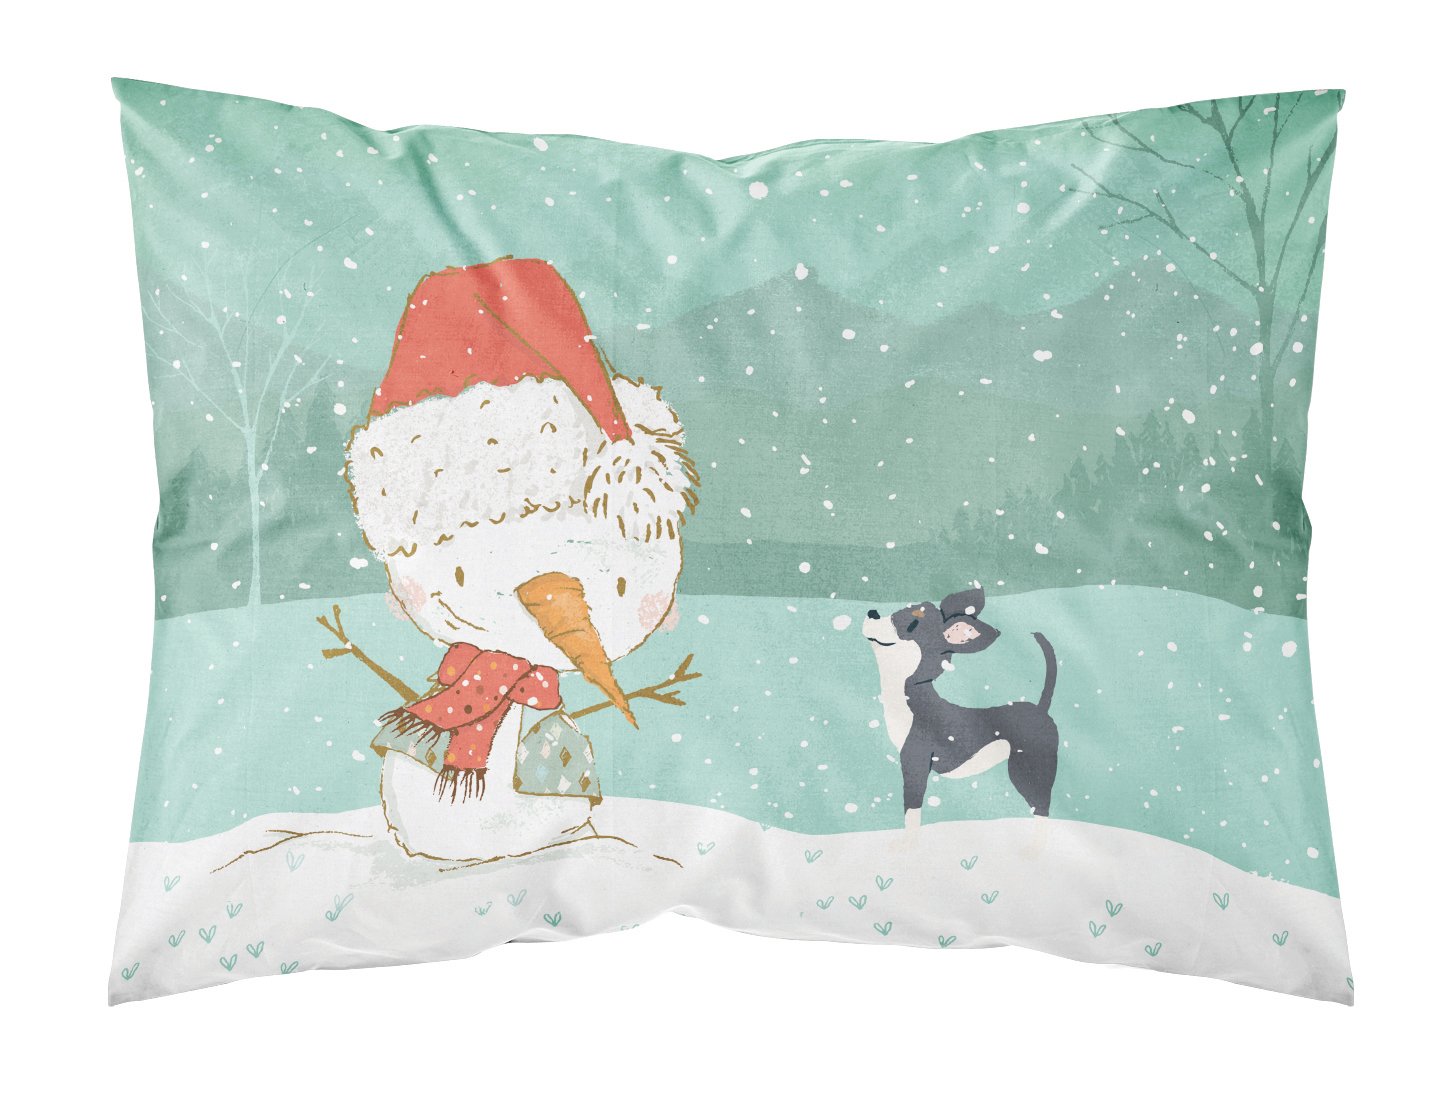 Black Chihuahua Snowman Christmas Fabric Standard Pillowcase CK2080PILLOWCASE by Caroline's Treasures